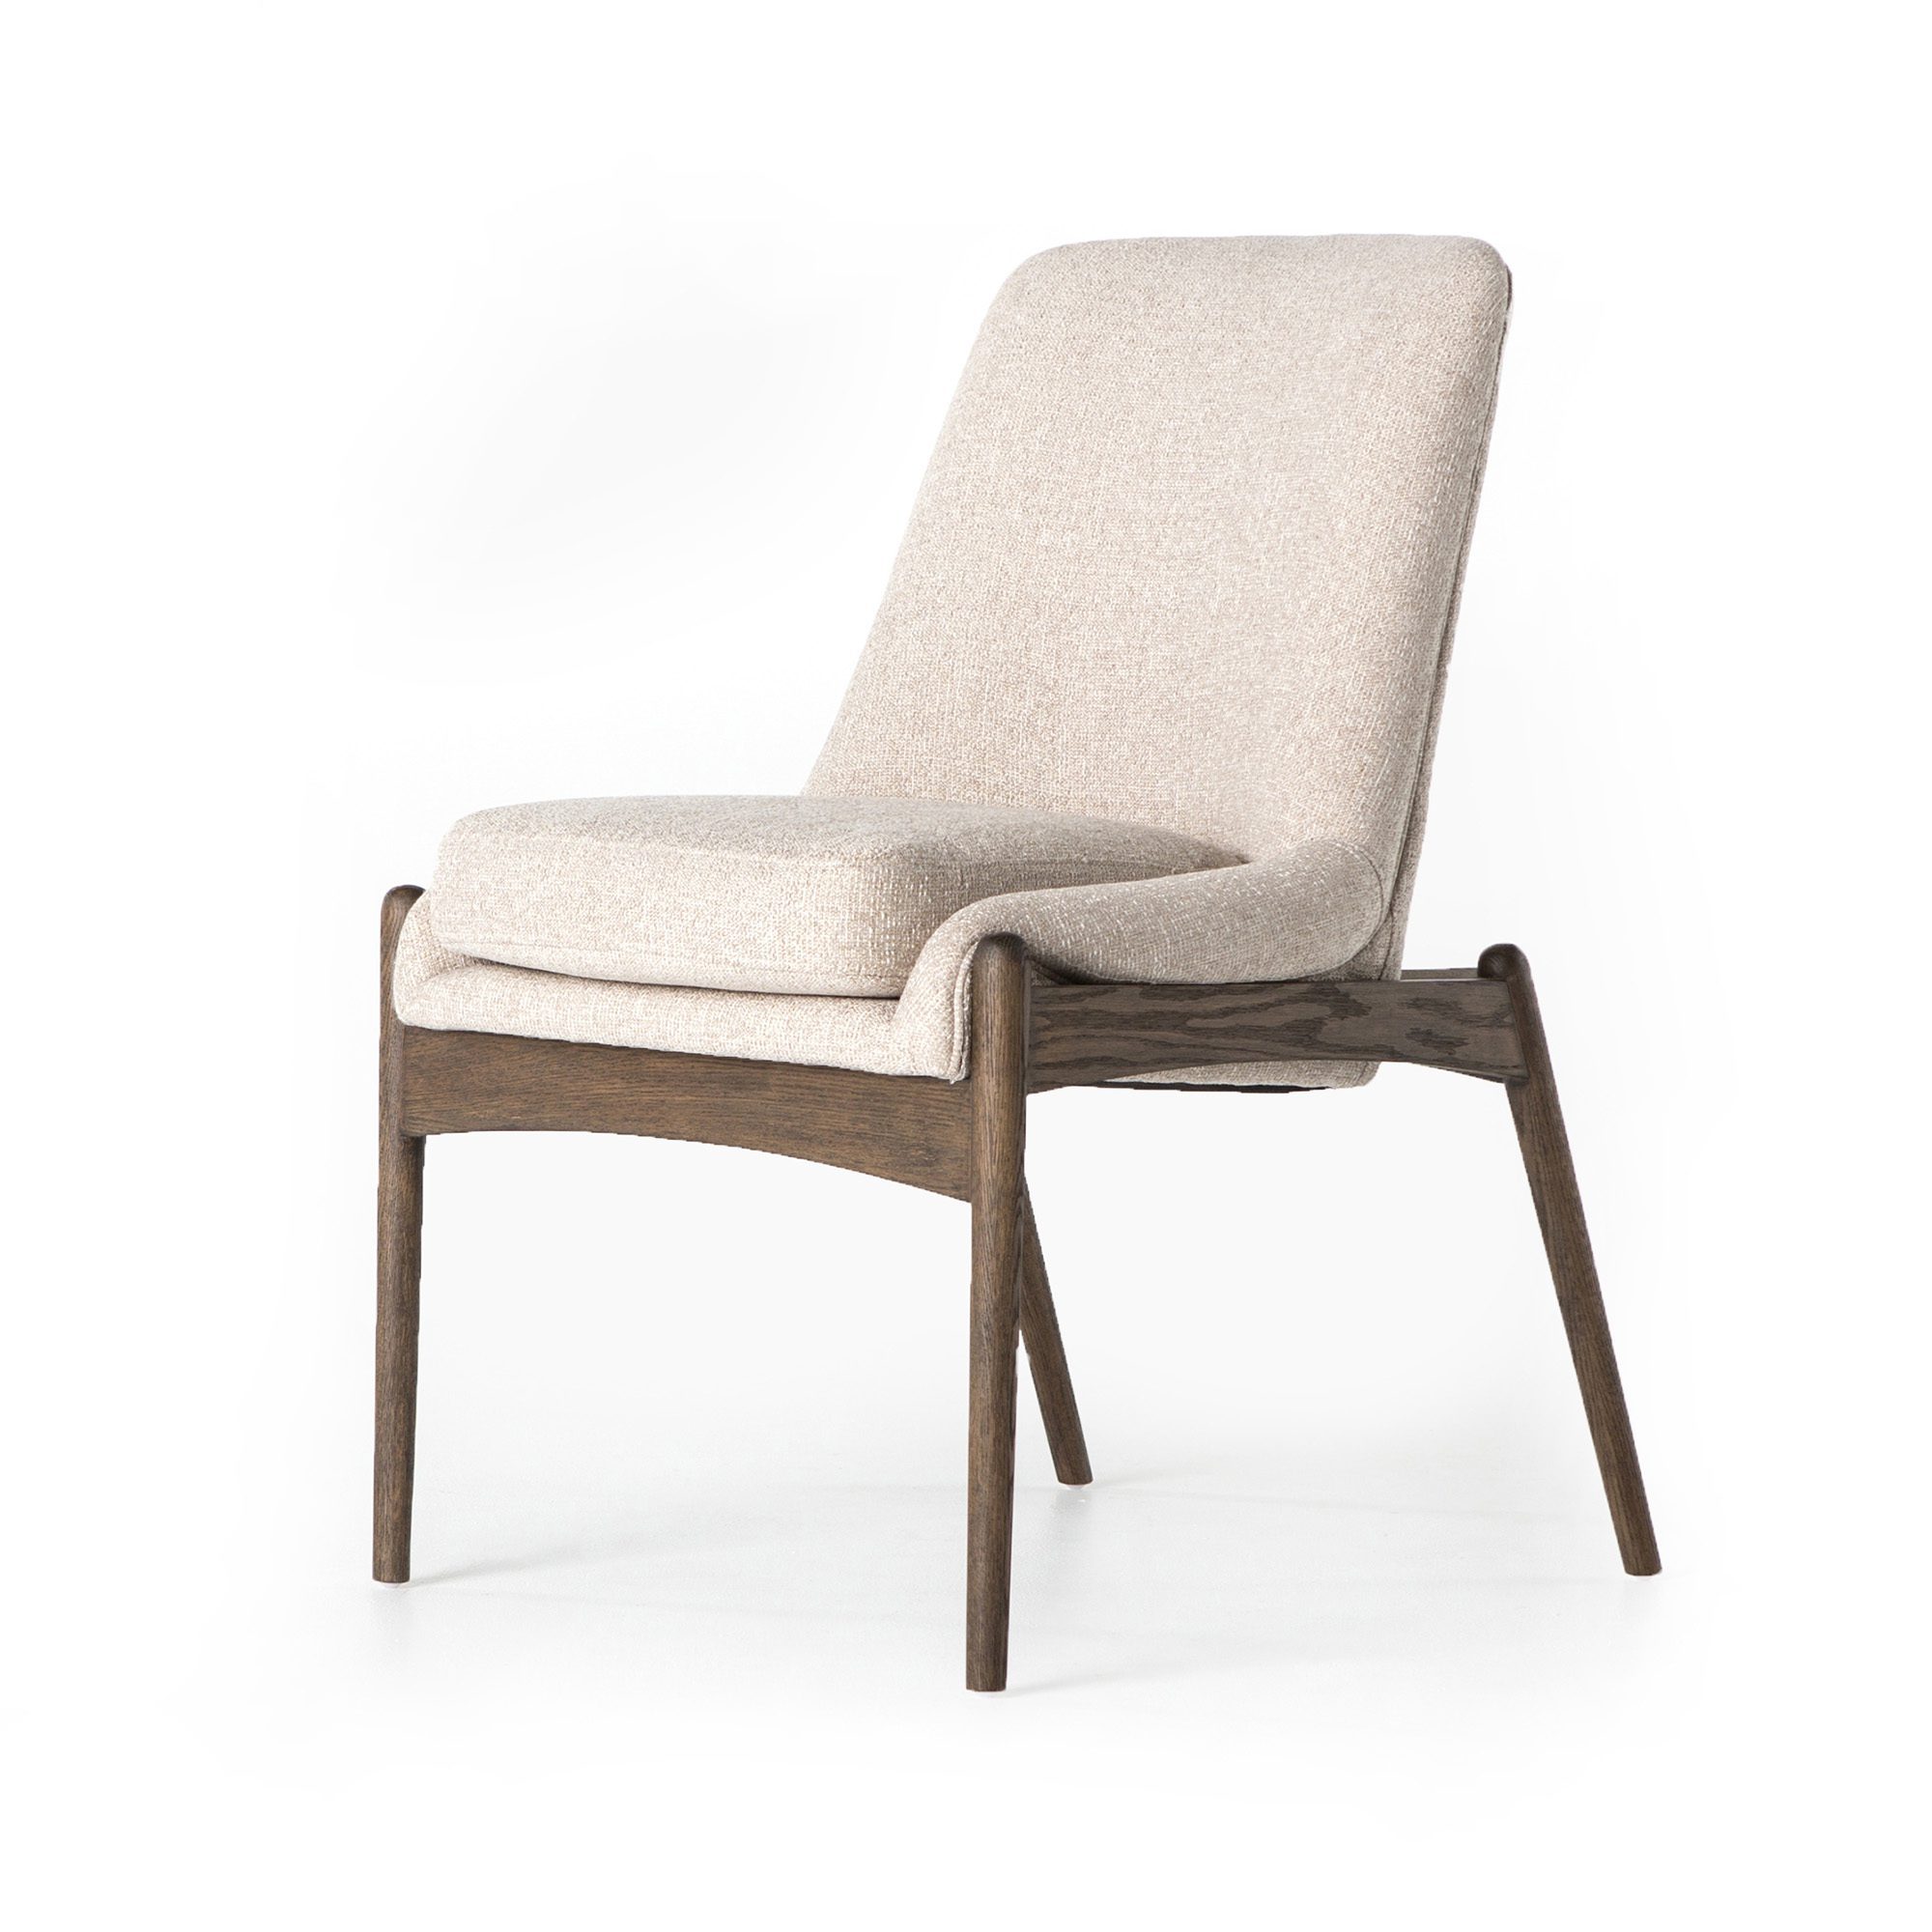 Braden Dining Chair - Hedi's Furniture